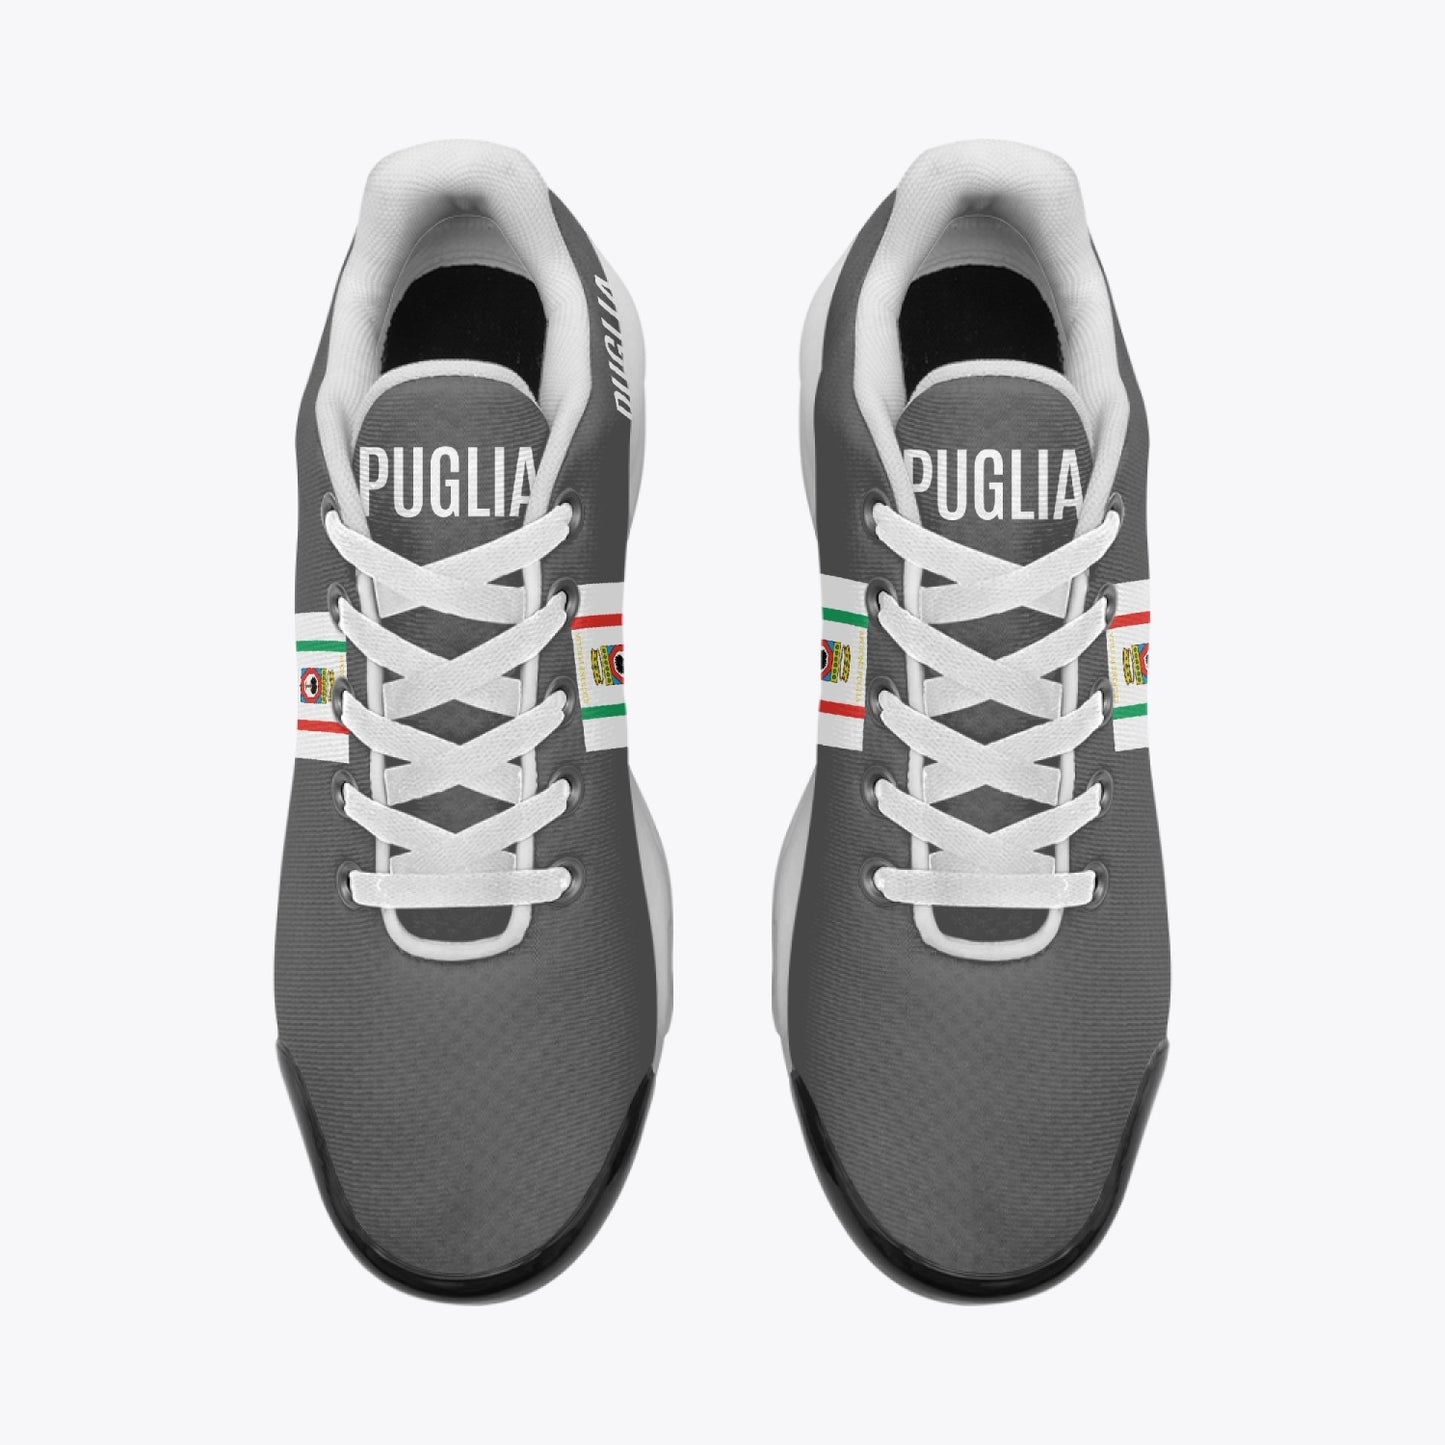 Puglia Bounce Sneakers - Black